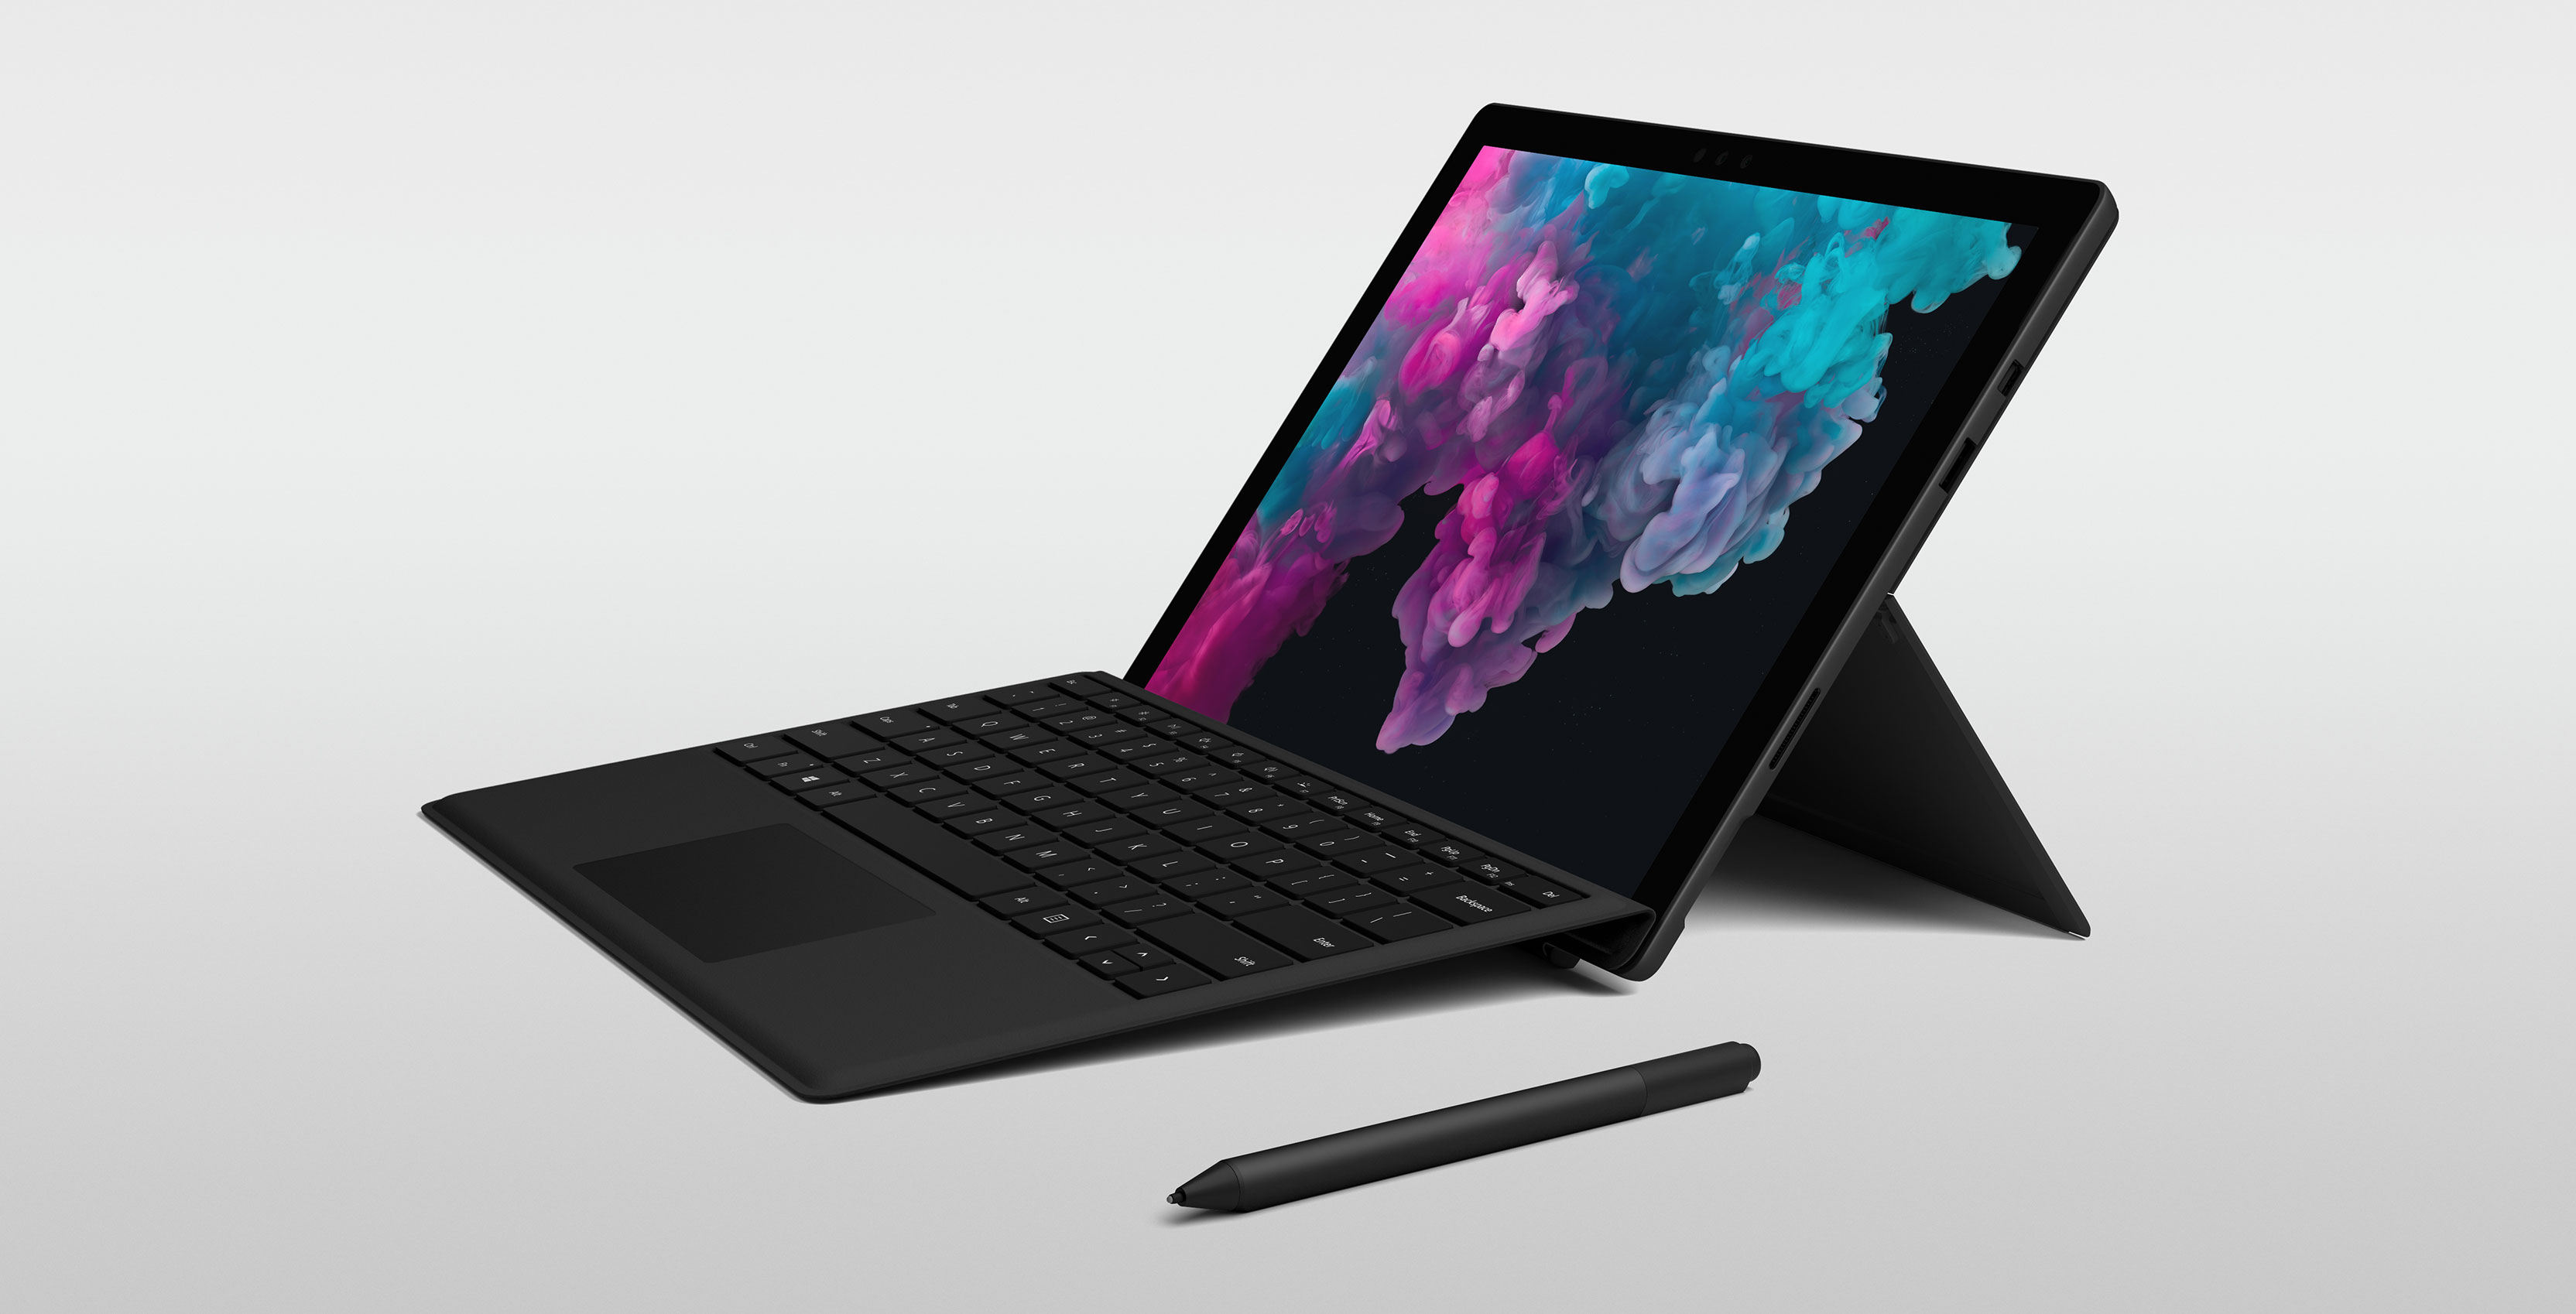 Microsoft reveals Surface Pro 6 in new 'Matte Black' colour